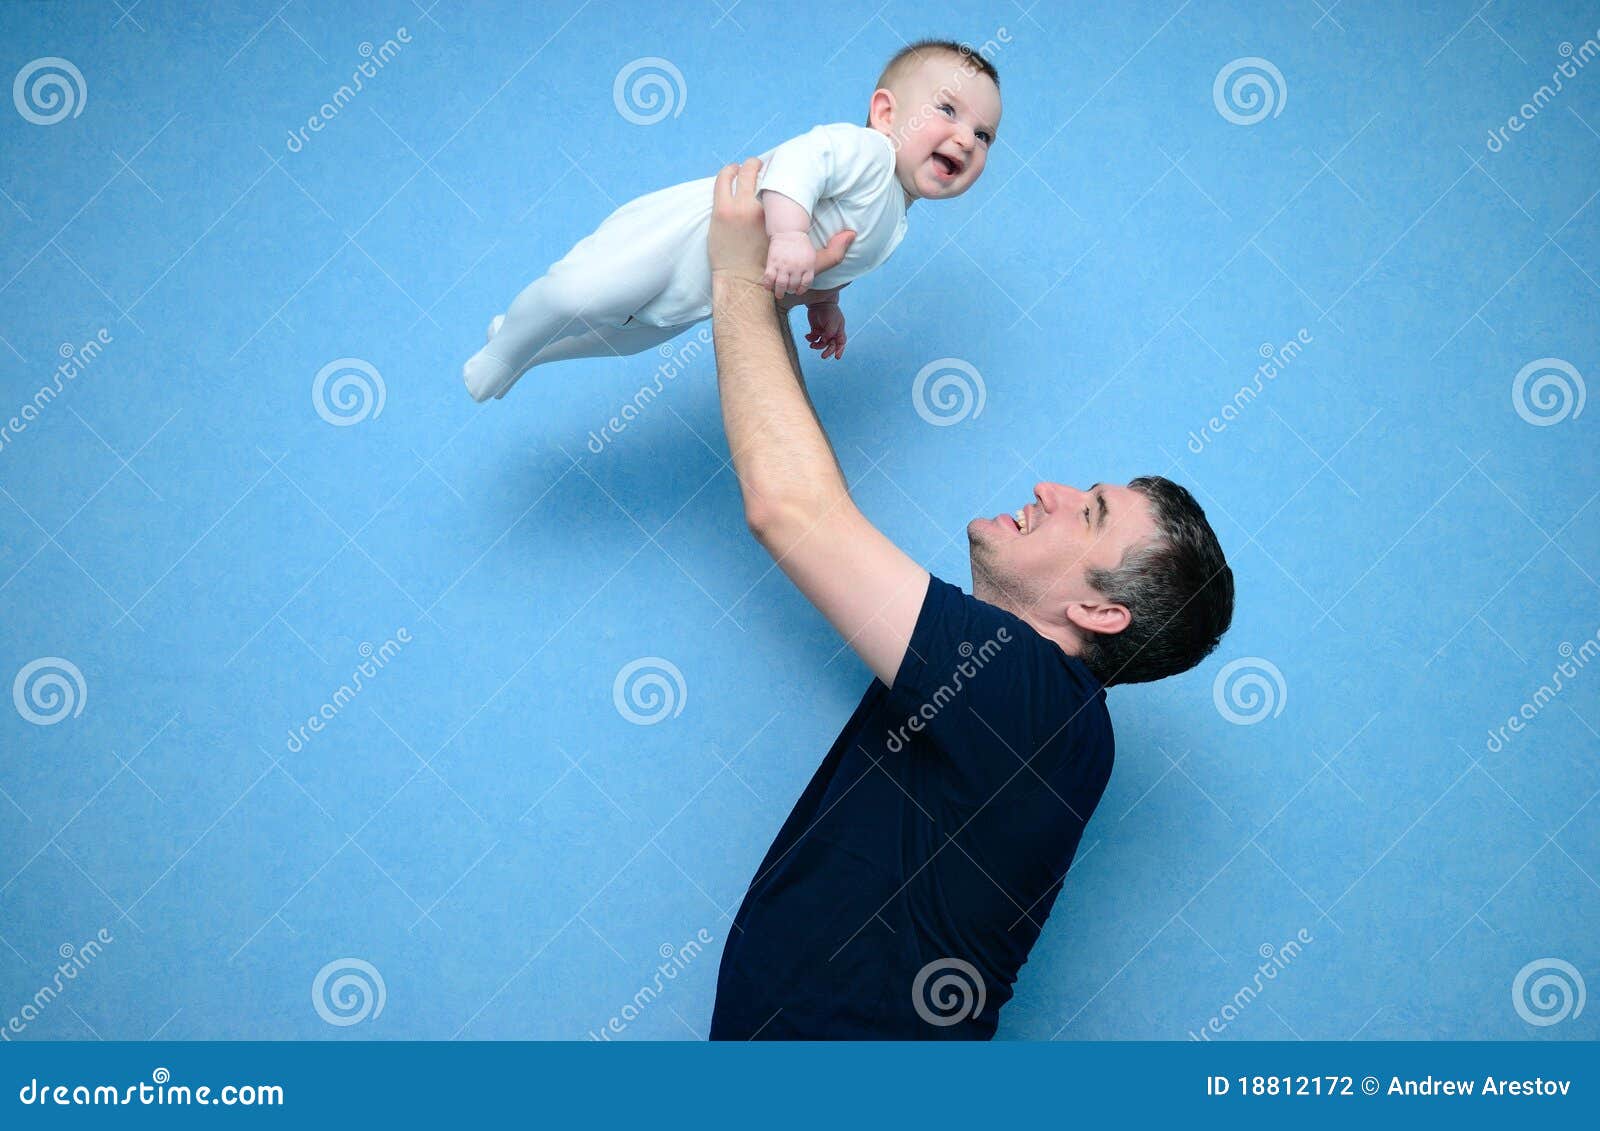 Мужчина держит ребенка